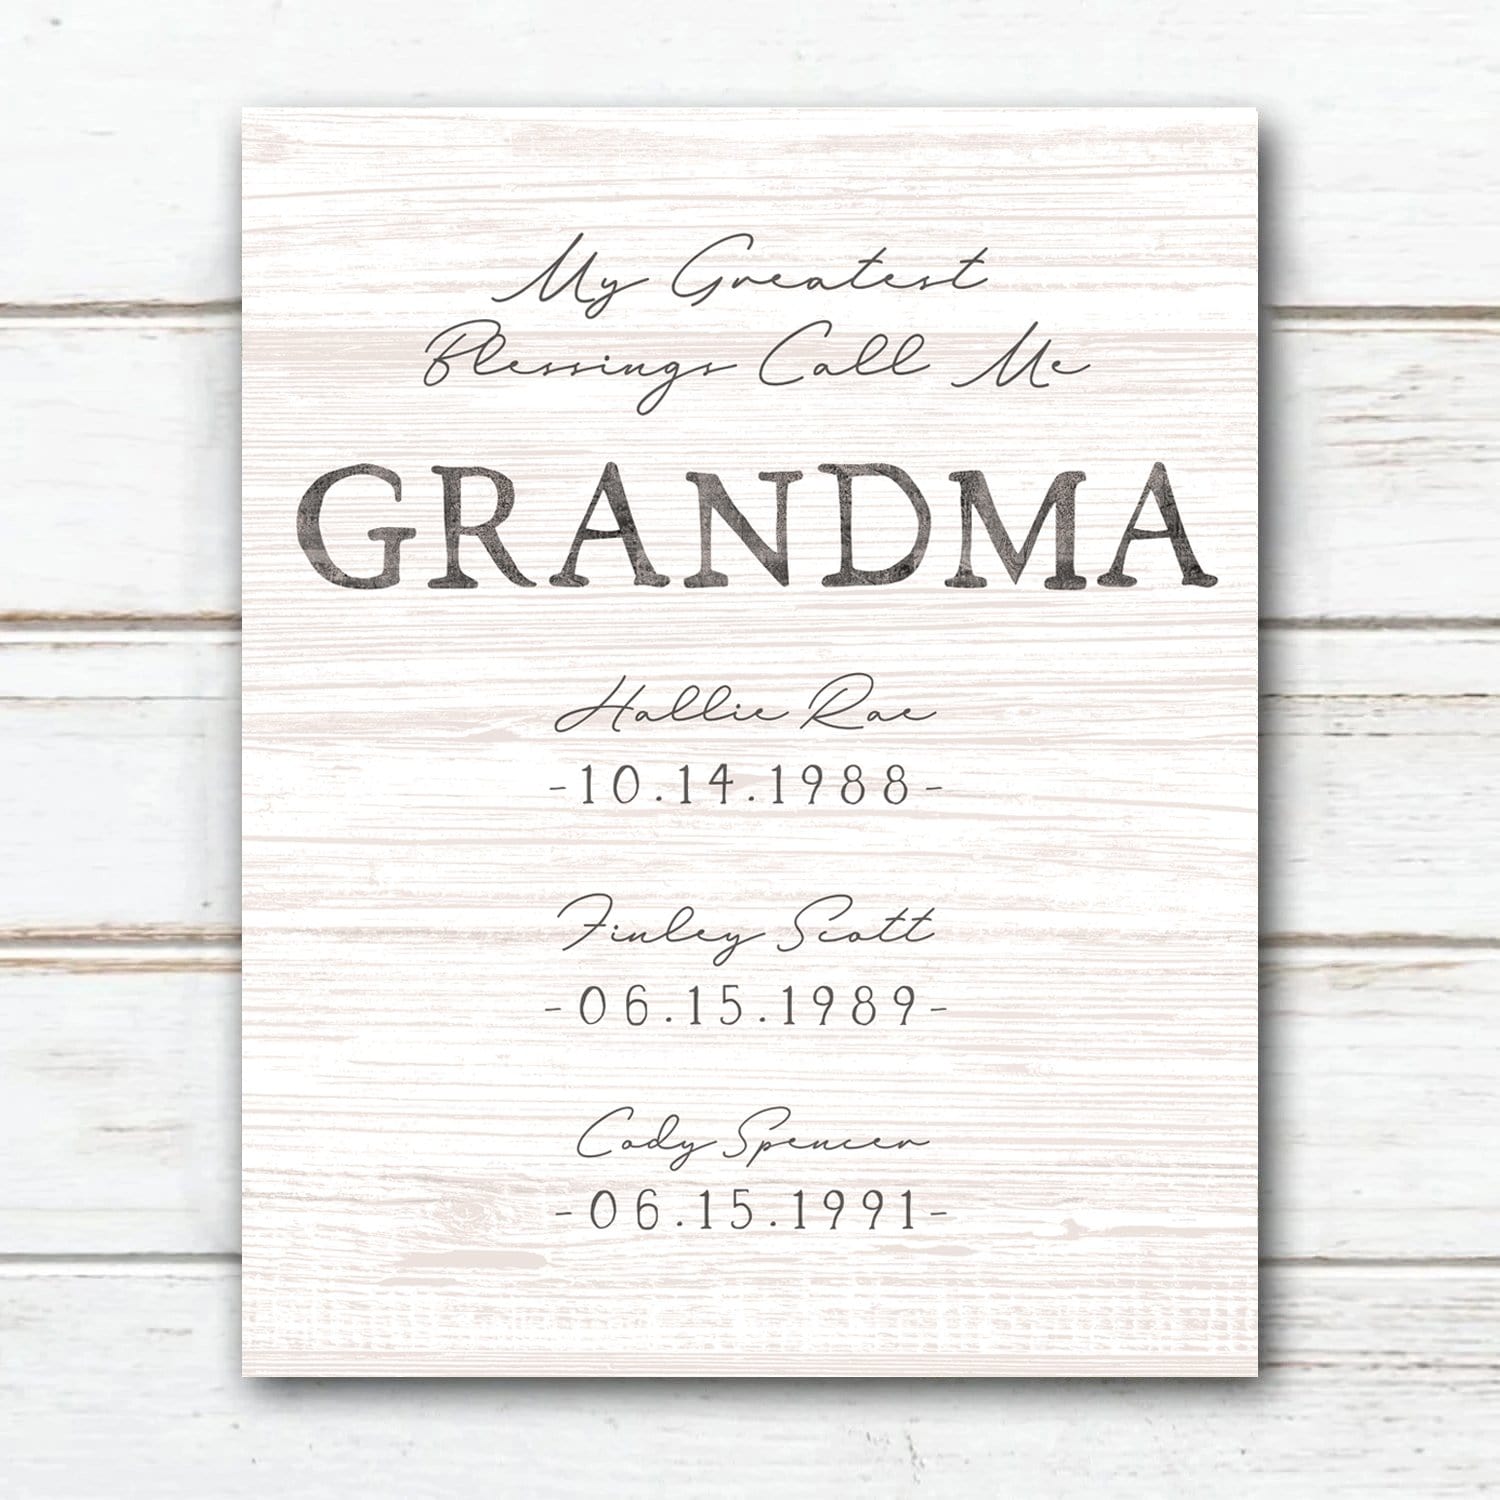 Greatest Blessings Call Me Grandma - PersonalPrints